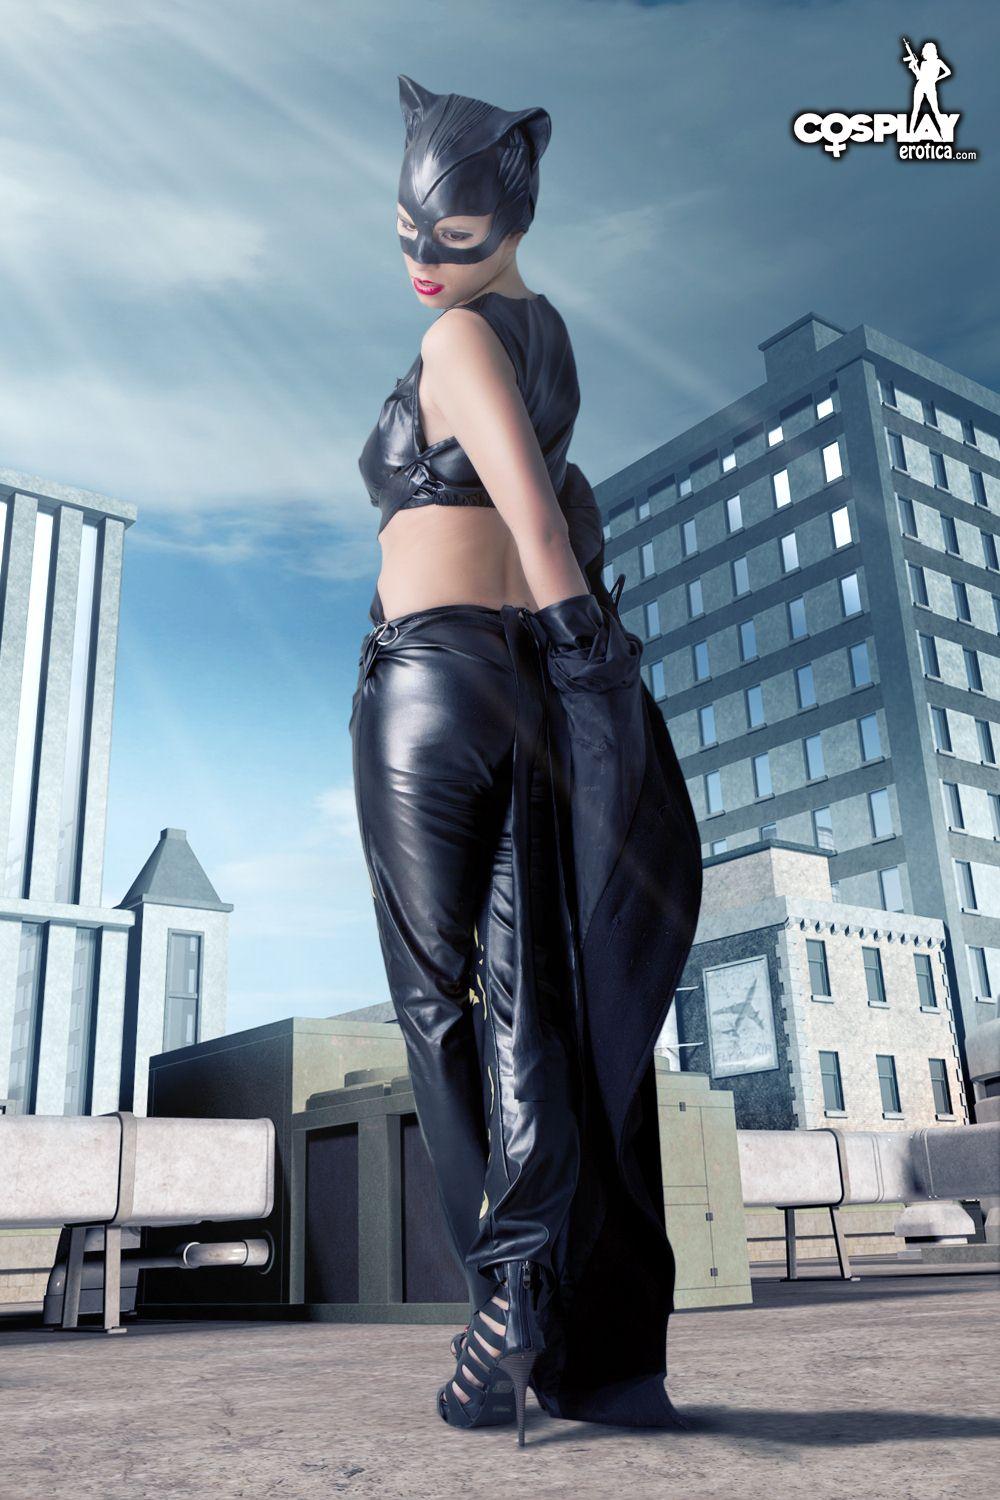 Sexy cosplayer cassie si veste come catwoman
 #53704038